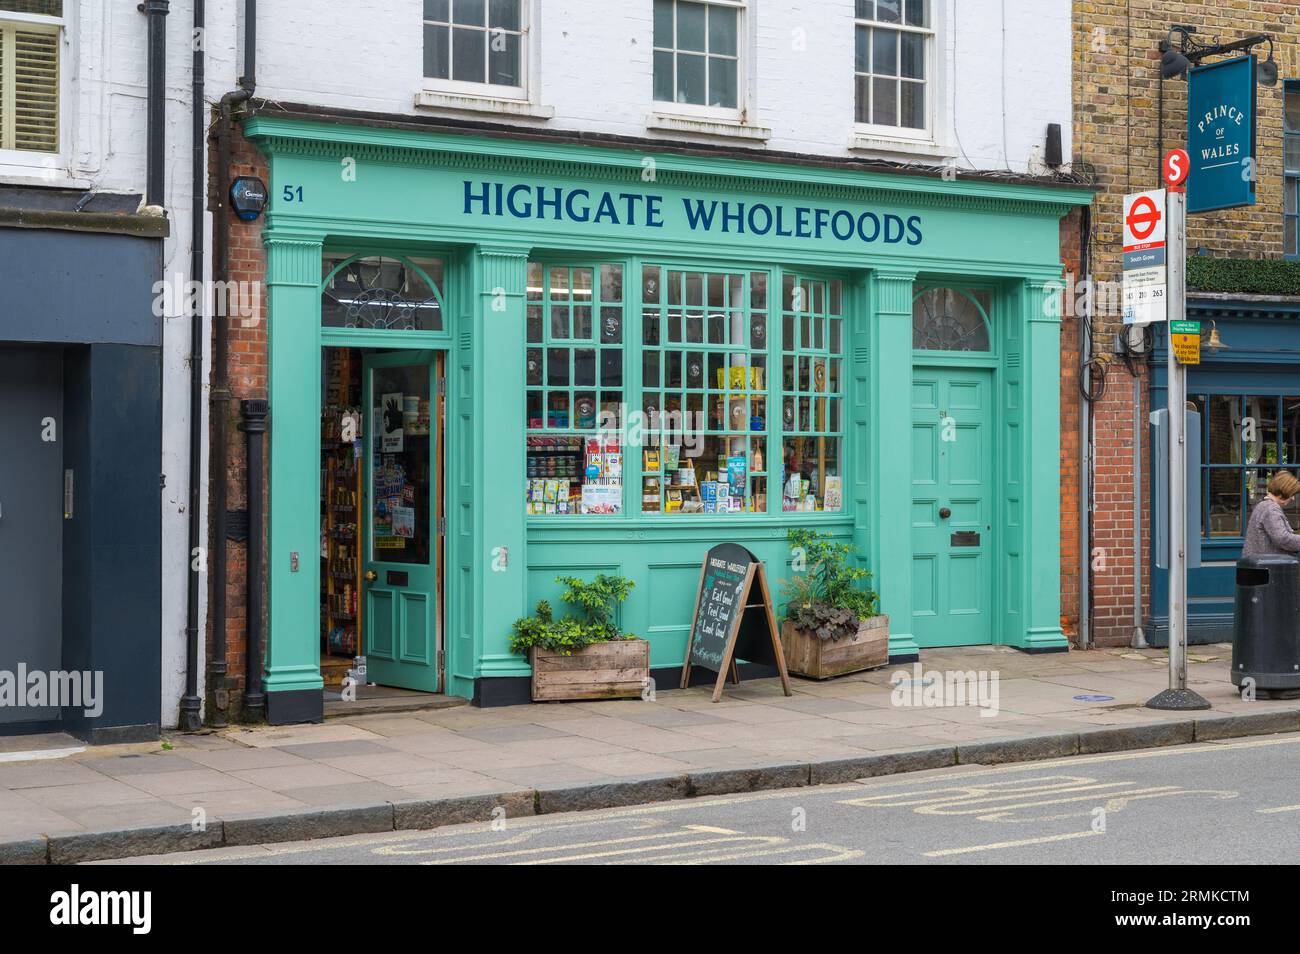 Highgate Wholefoods, a shop selling organic foods, fruit, vegetables and products. Highgate High Street, Highgate Village, London, England, UK Stock Photo